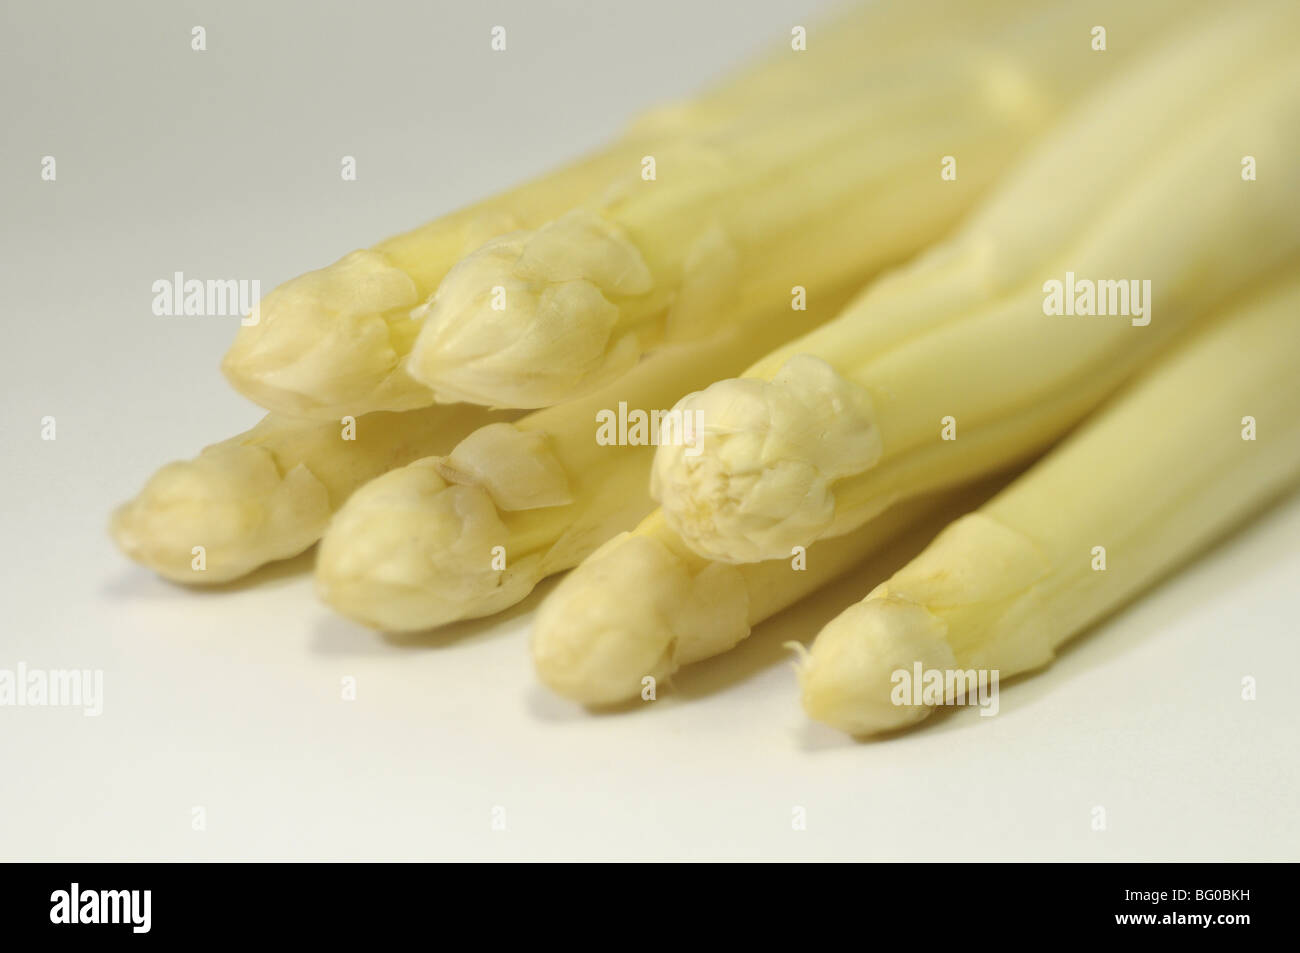 Asparagi bianchi (Asparagus officinalis), giovani germogli, studio immagine. Foto Stock